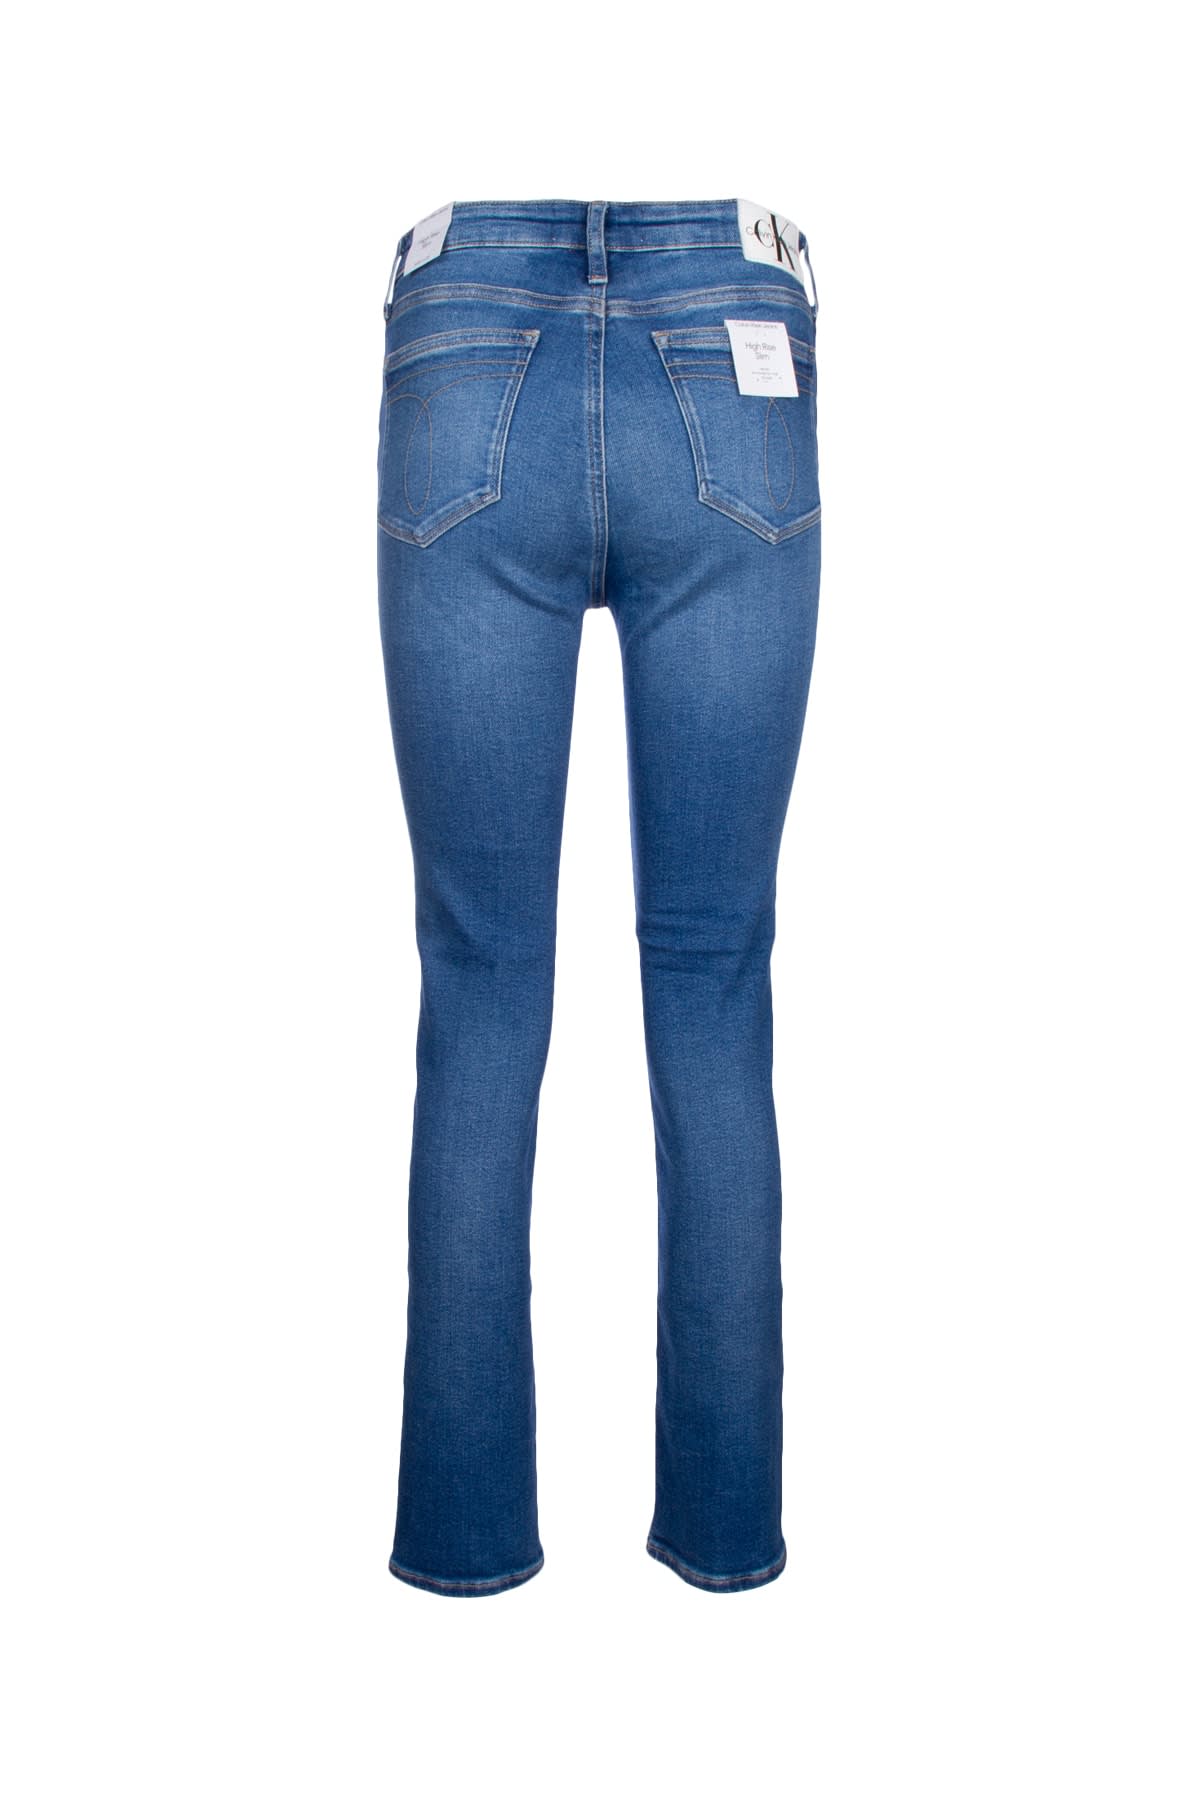 Calvin Klein Jeans Est.1978 Jeans In 1a4